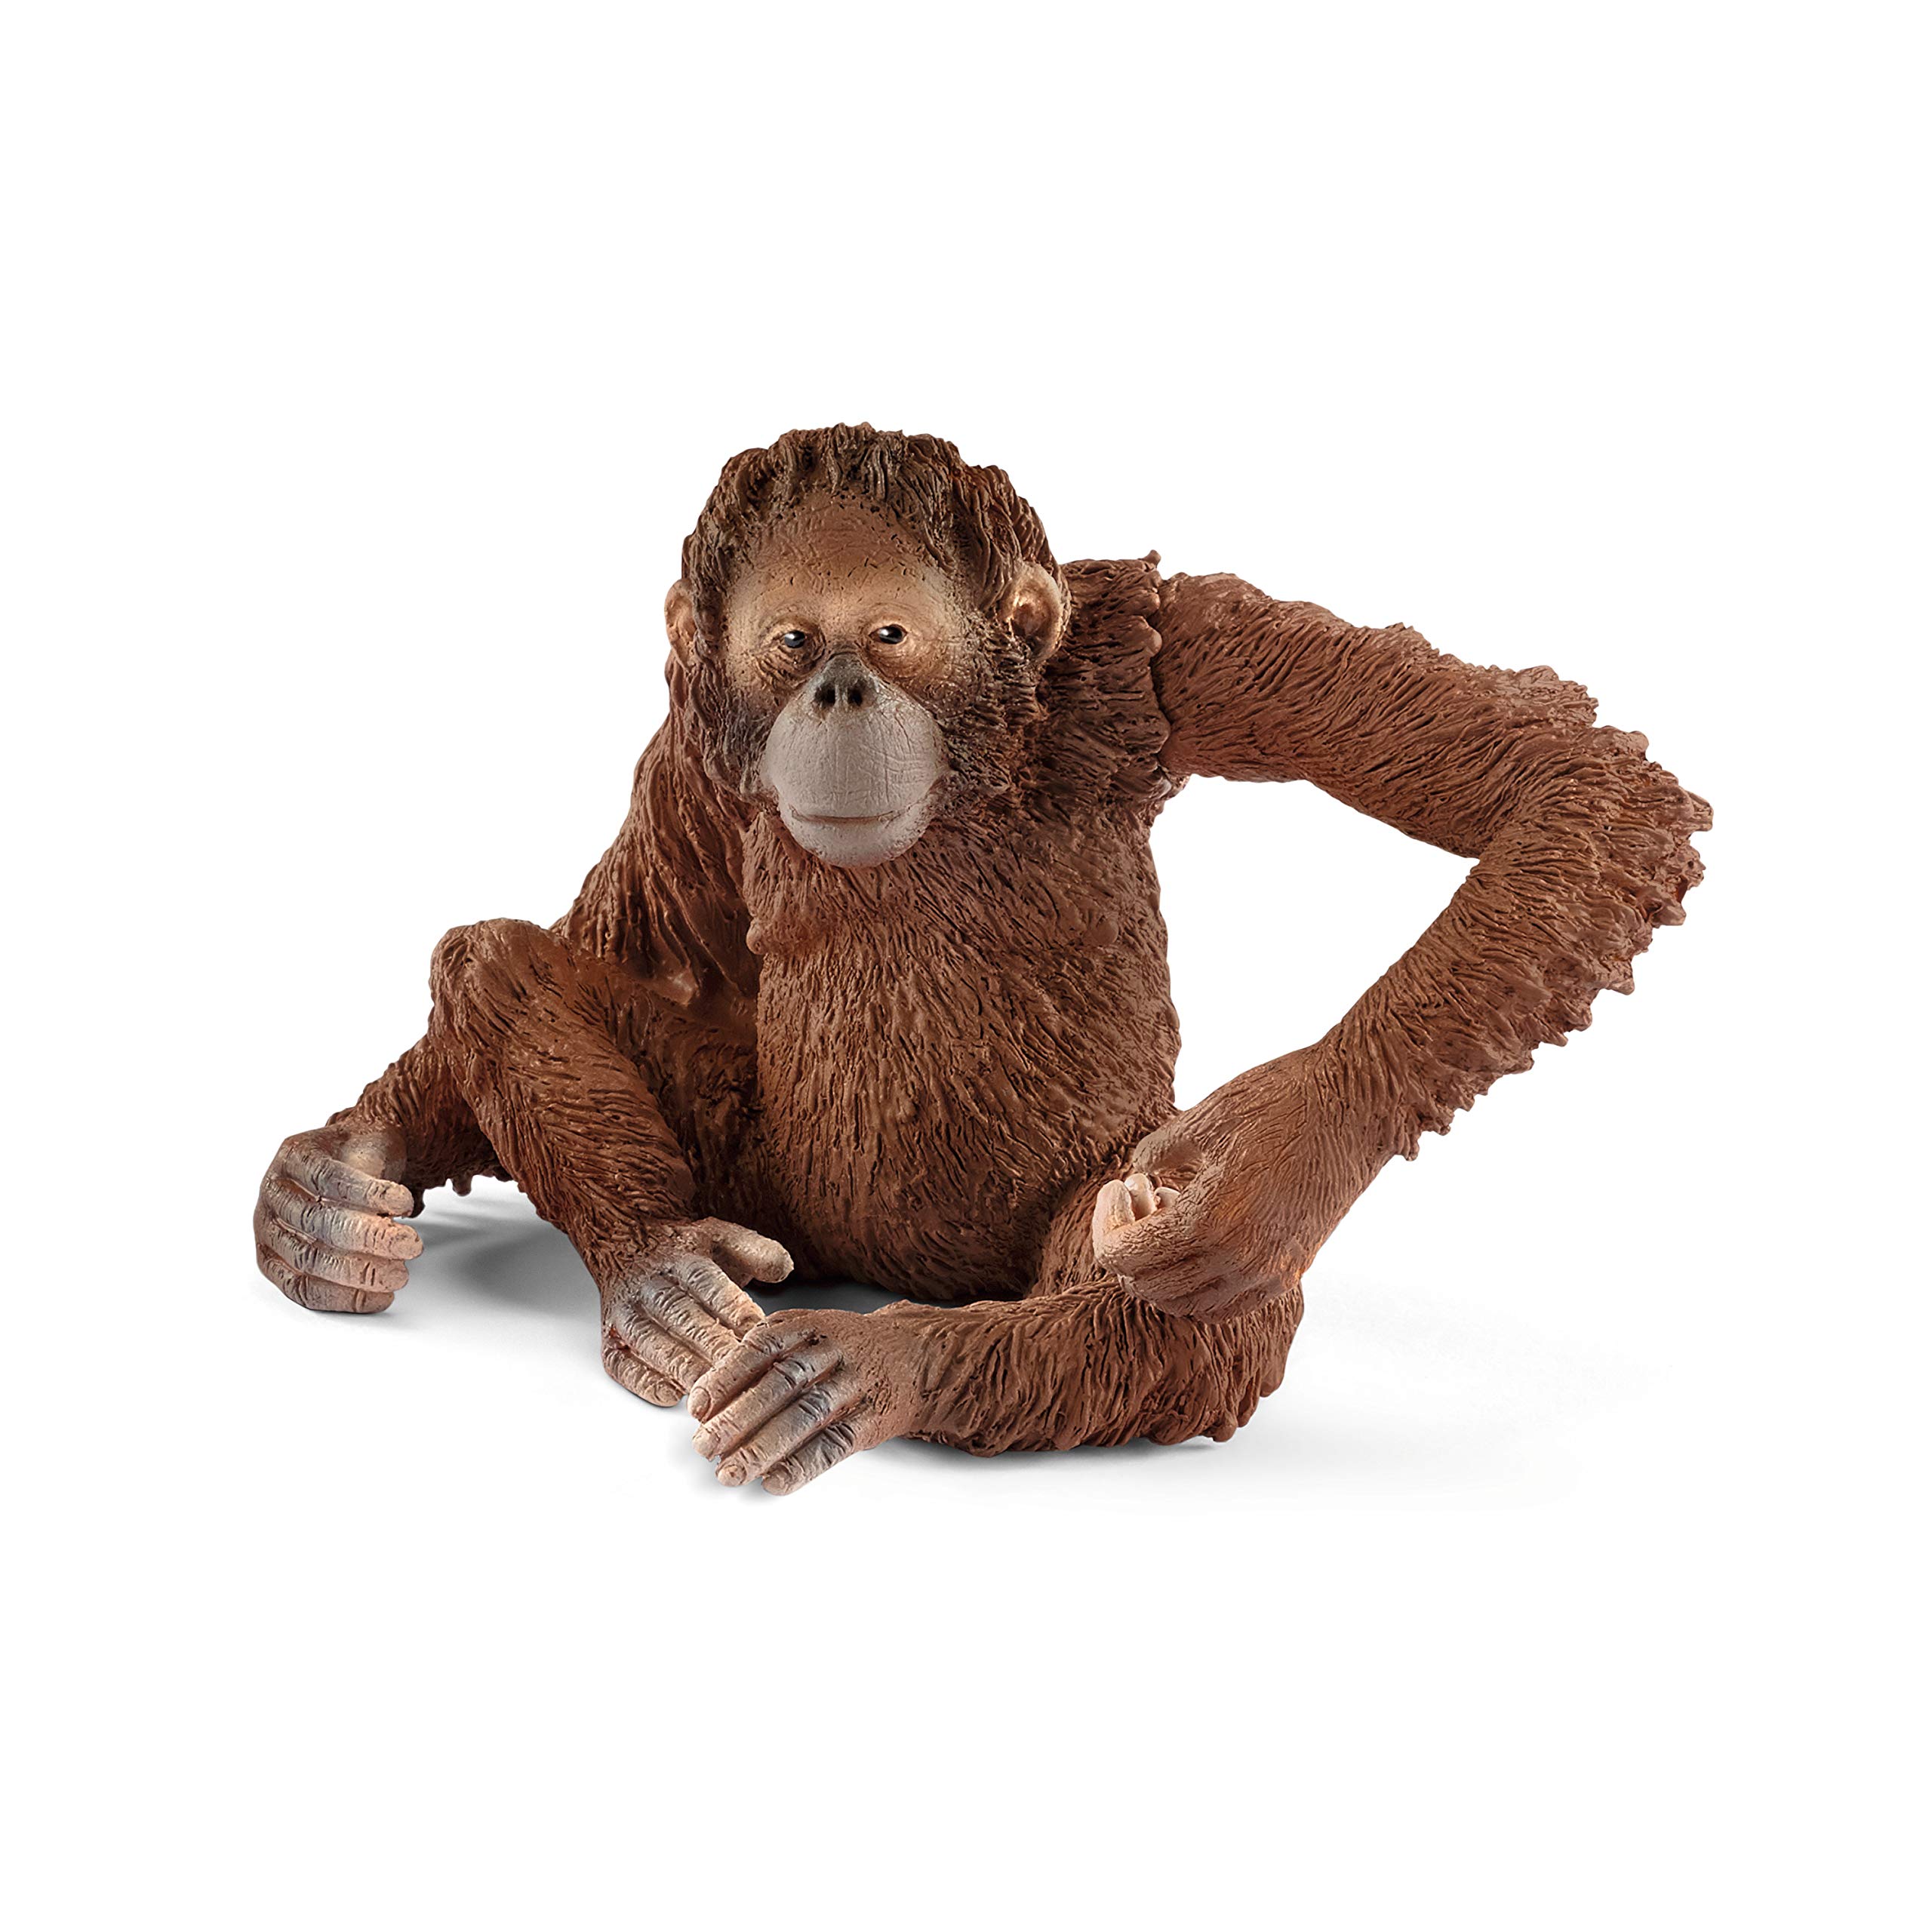 Animale Schleich orangotango femmina